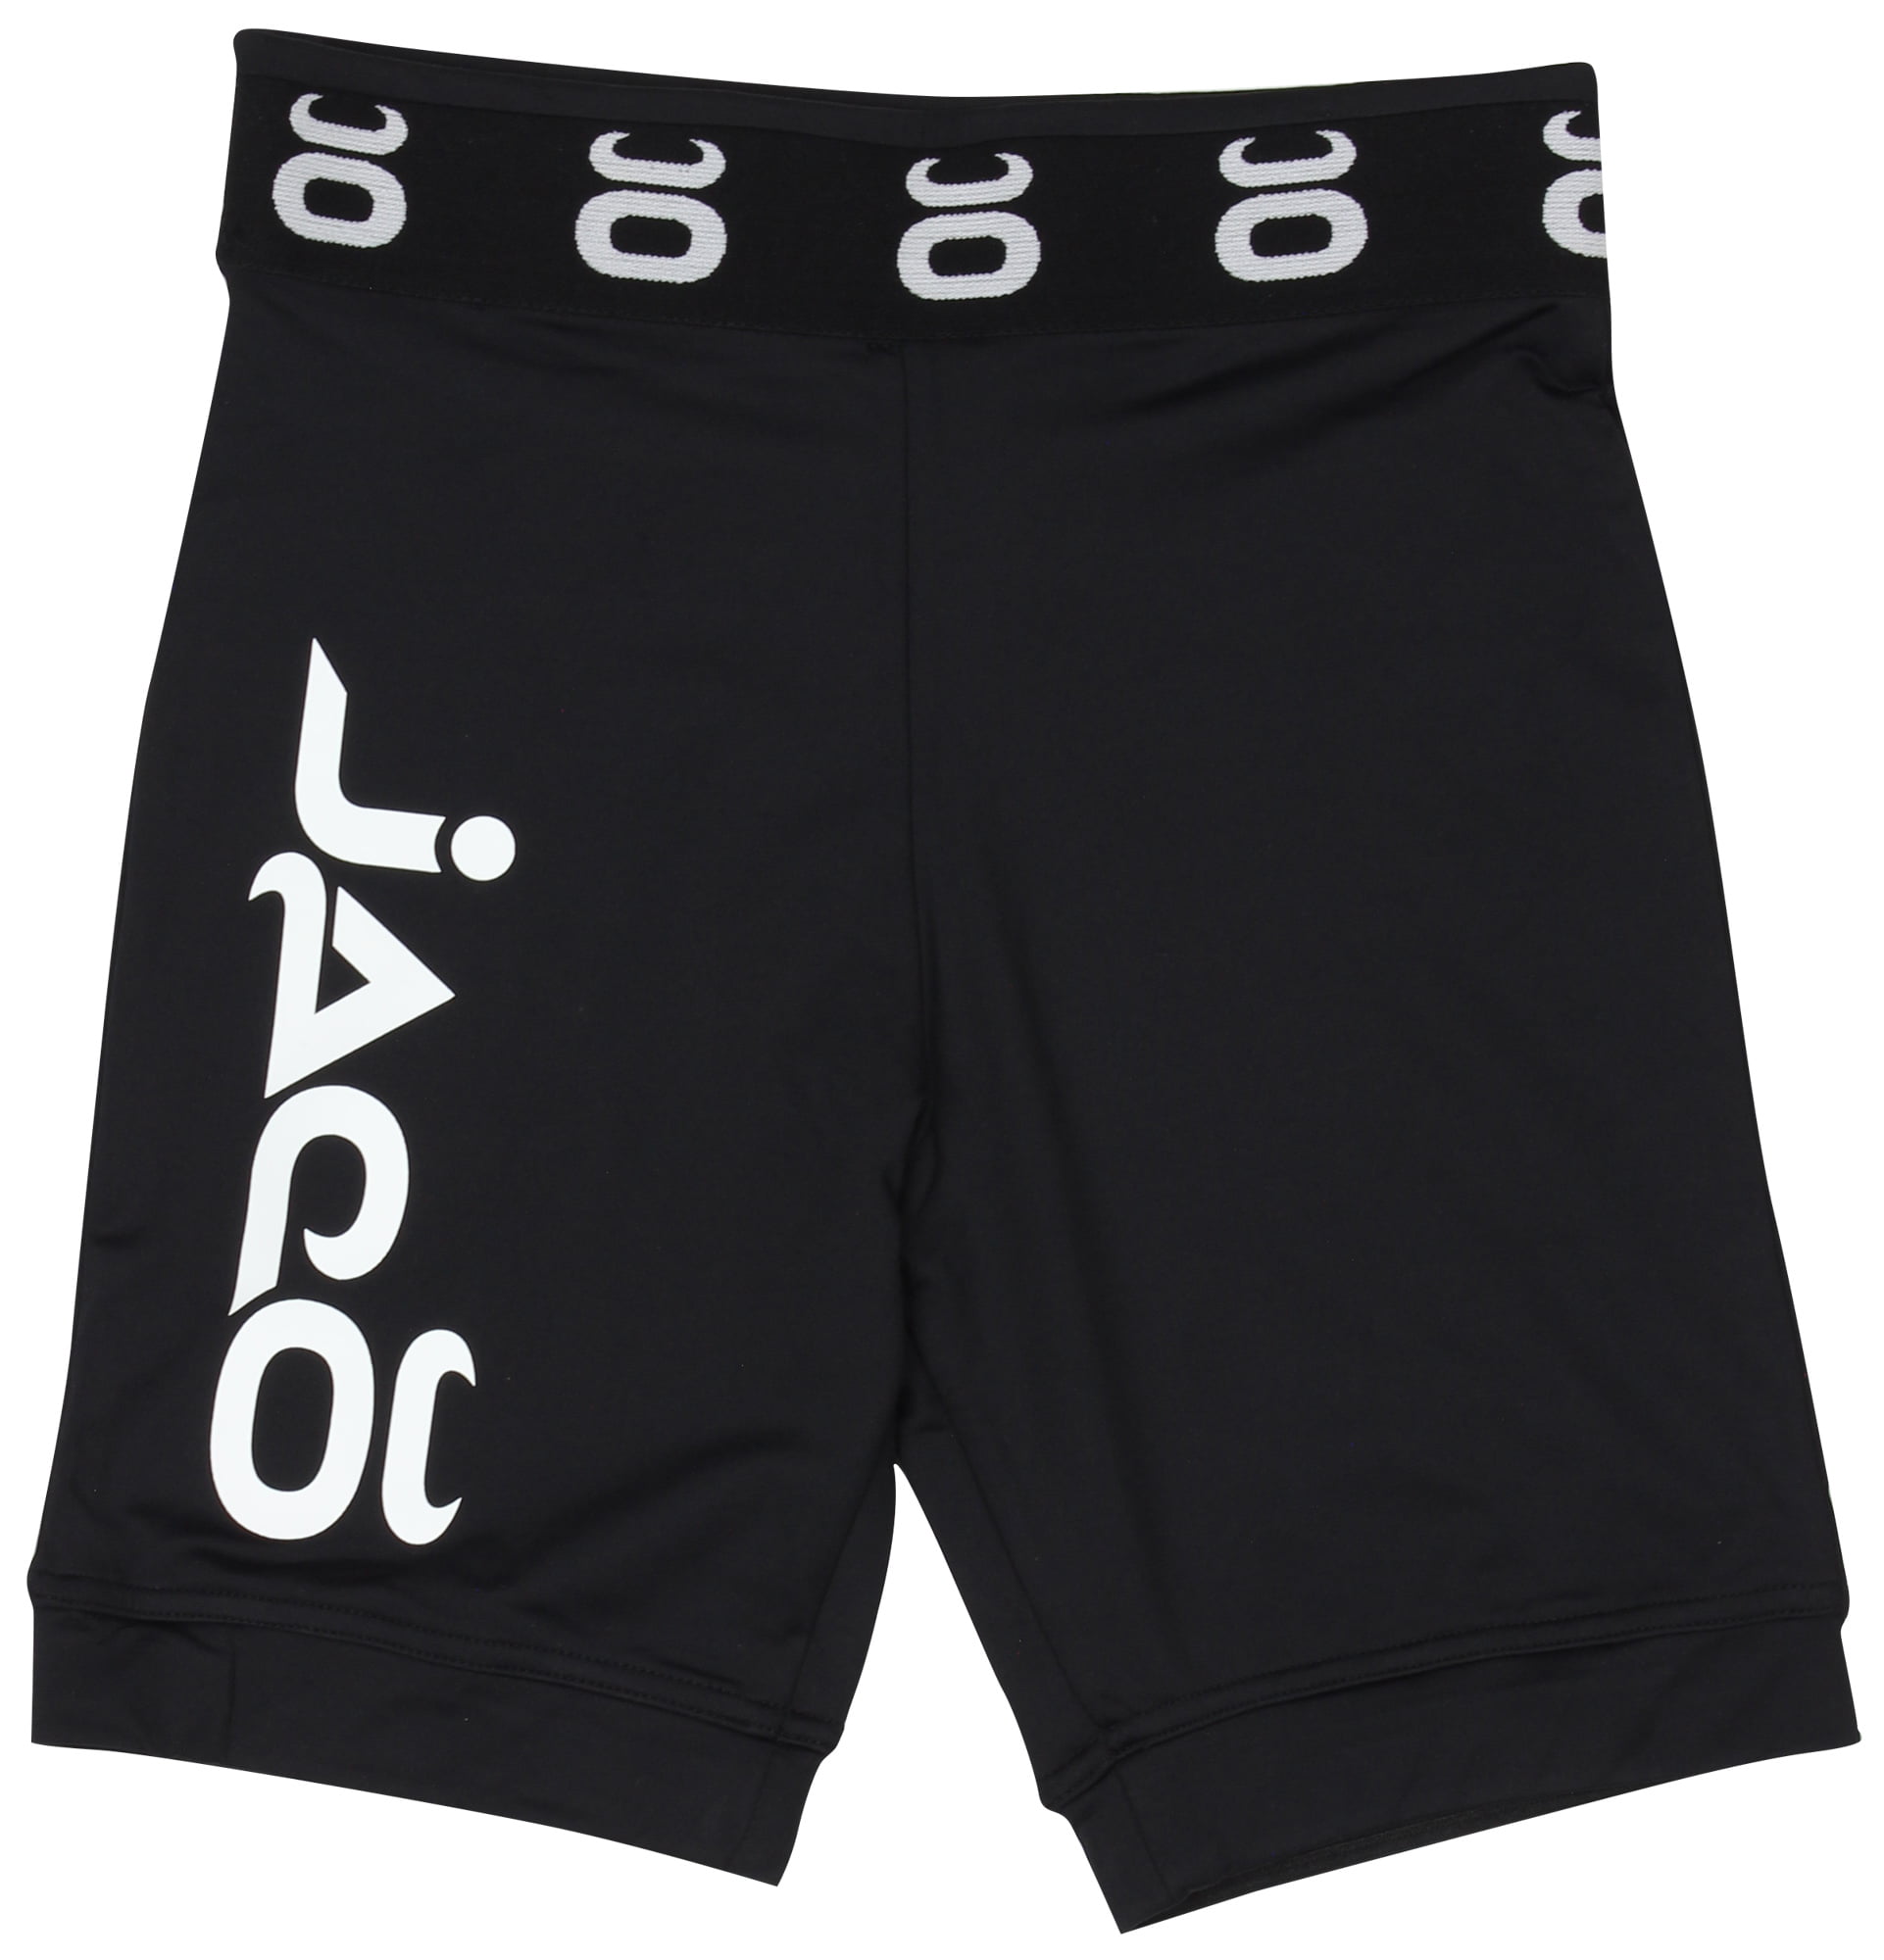 Jaco Vale Tudo Shorts Longer versions 